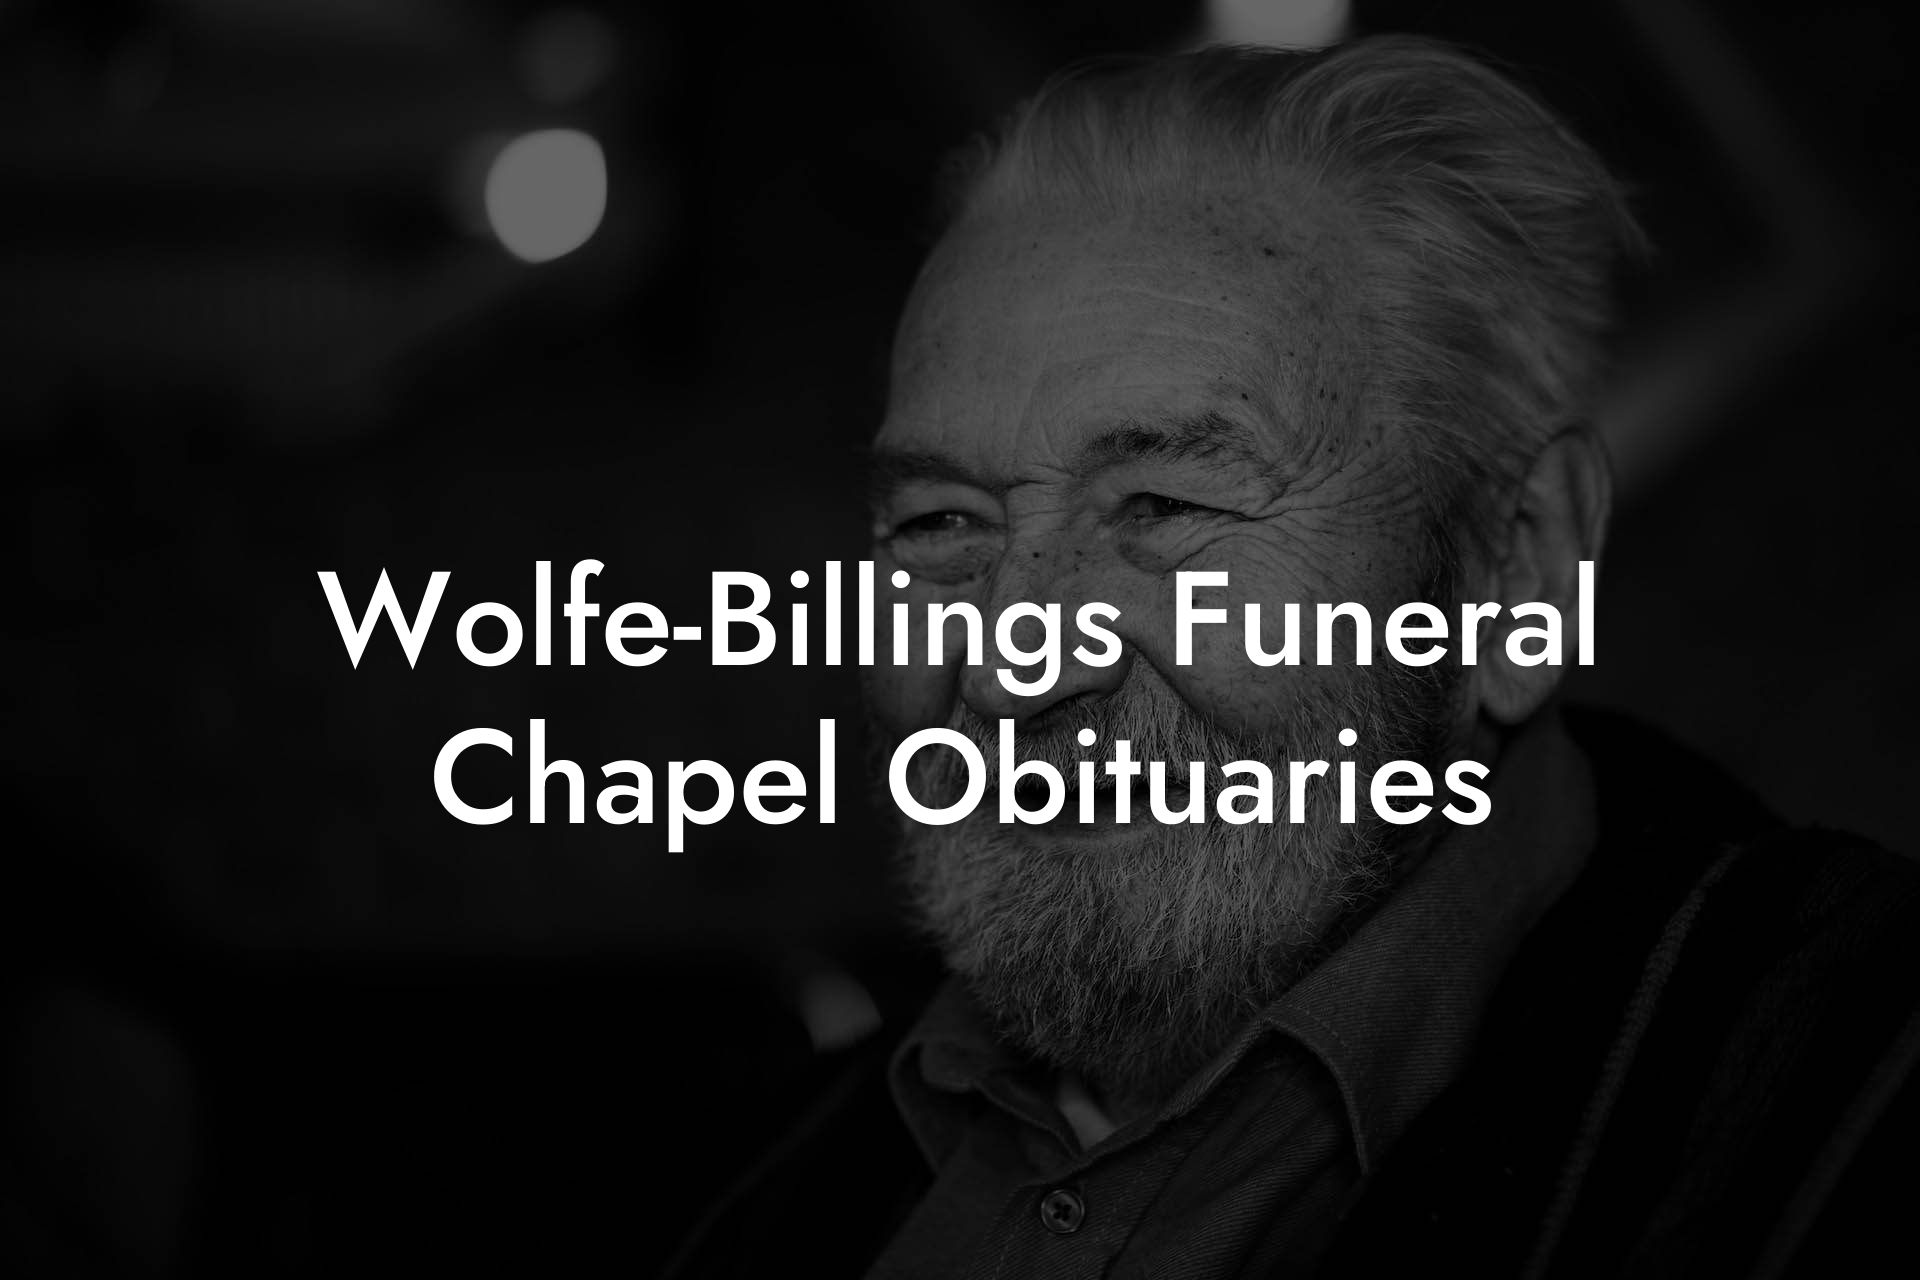 Wolfe-Billings Funeral Chapel Obituaries